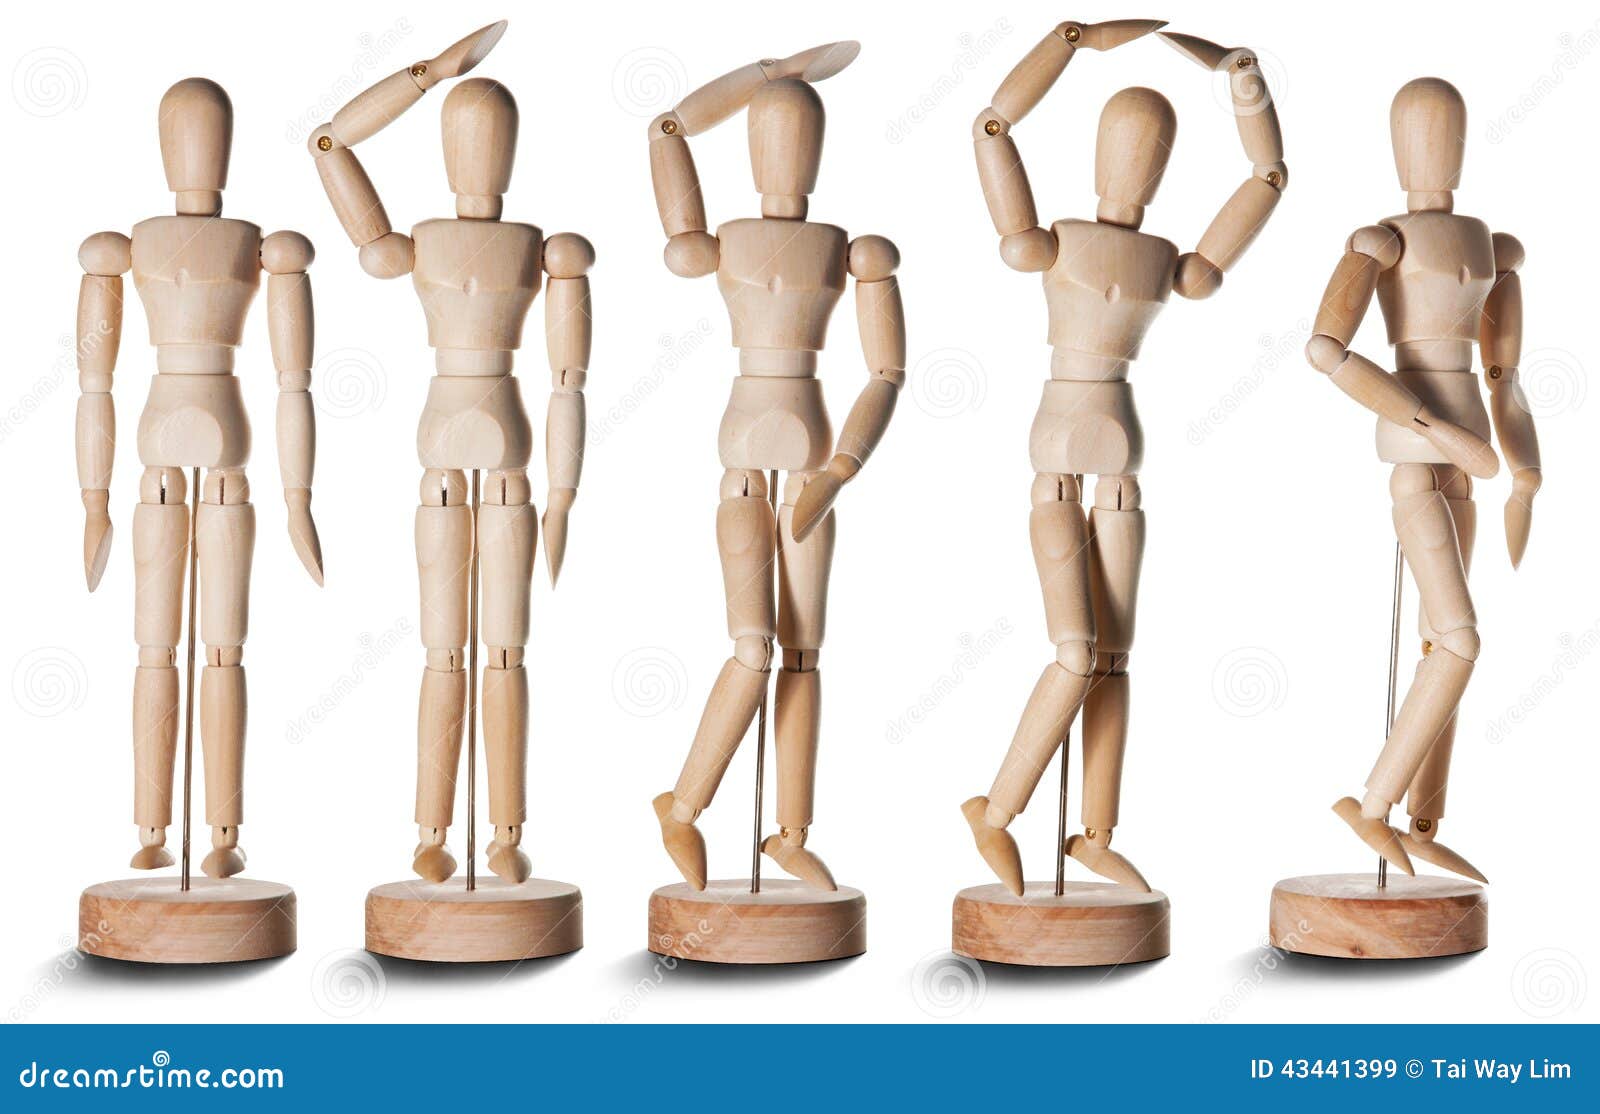 wooden-dummy-models-against-white-backgr